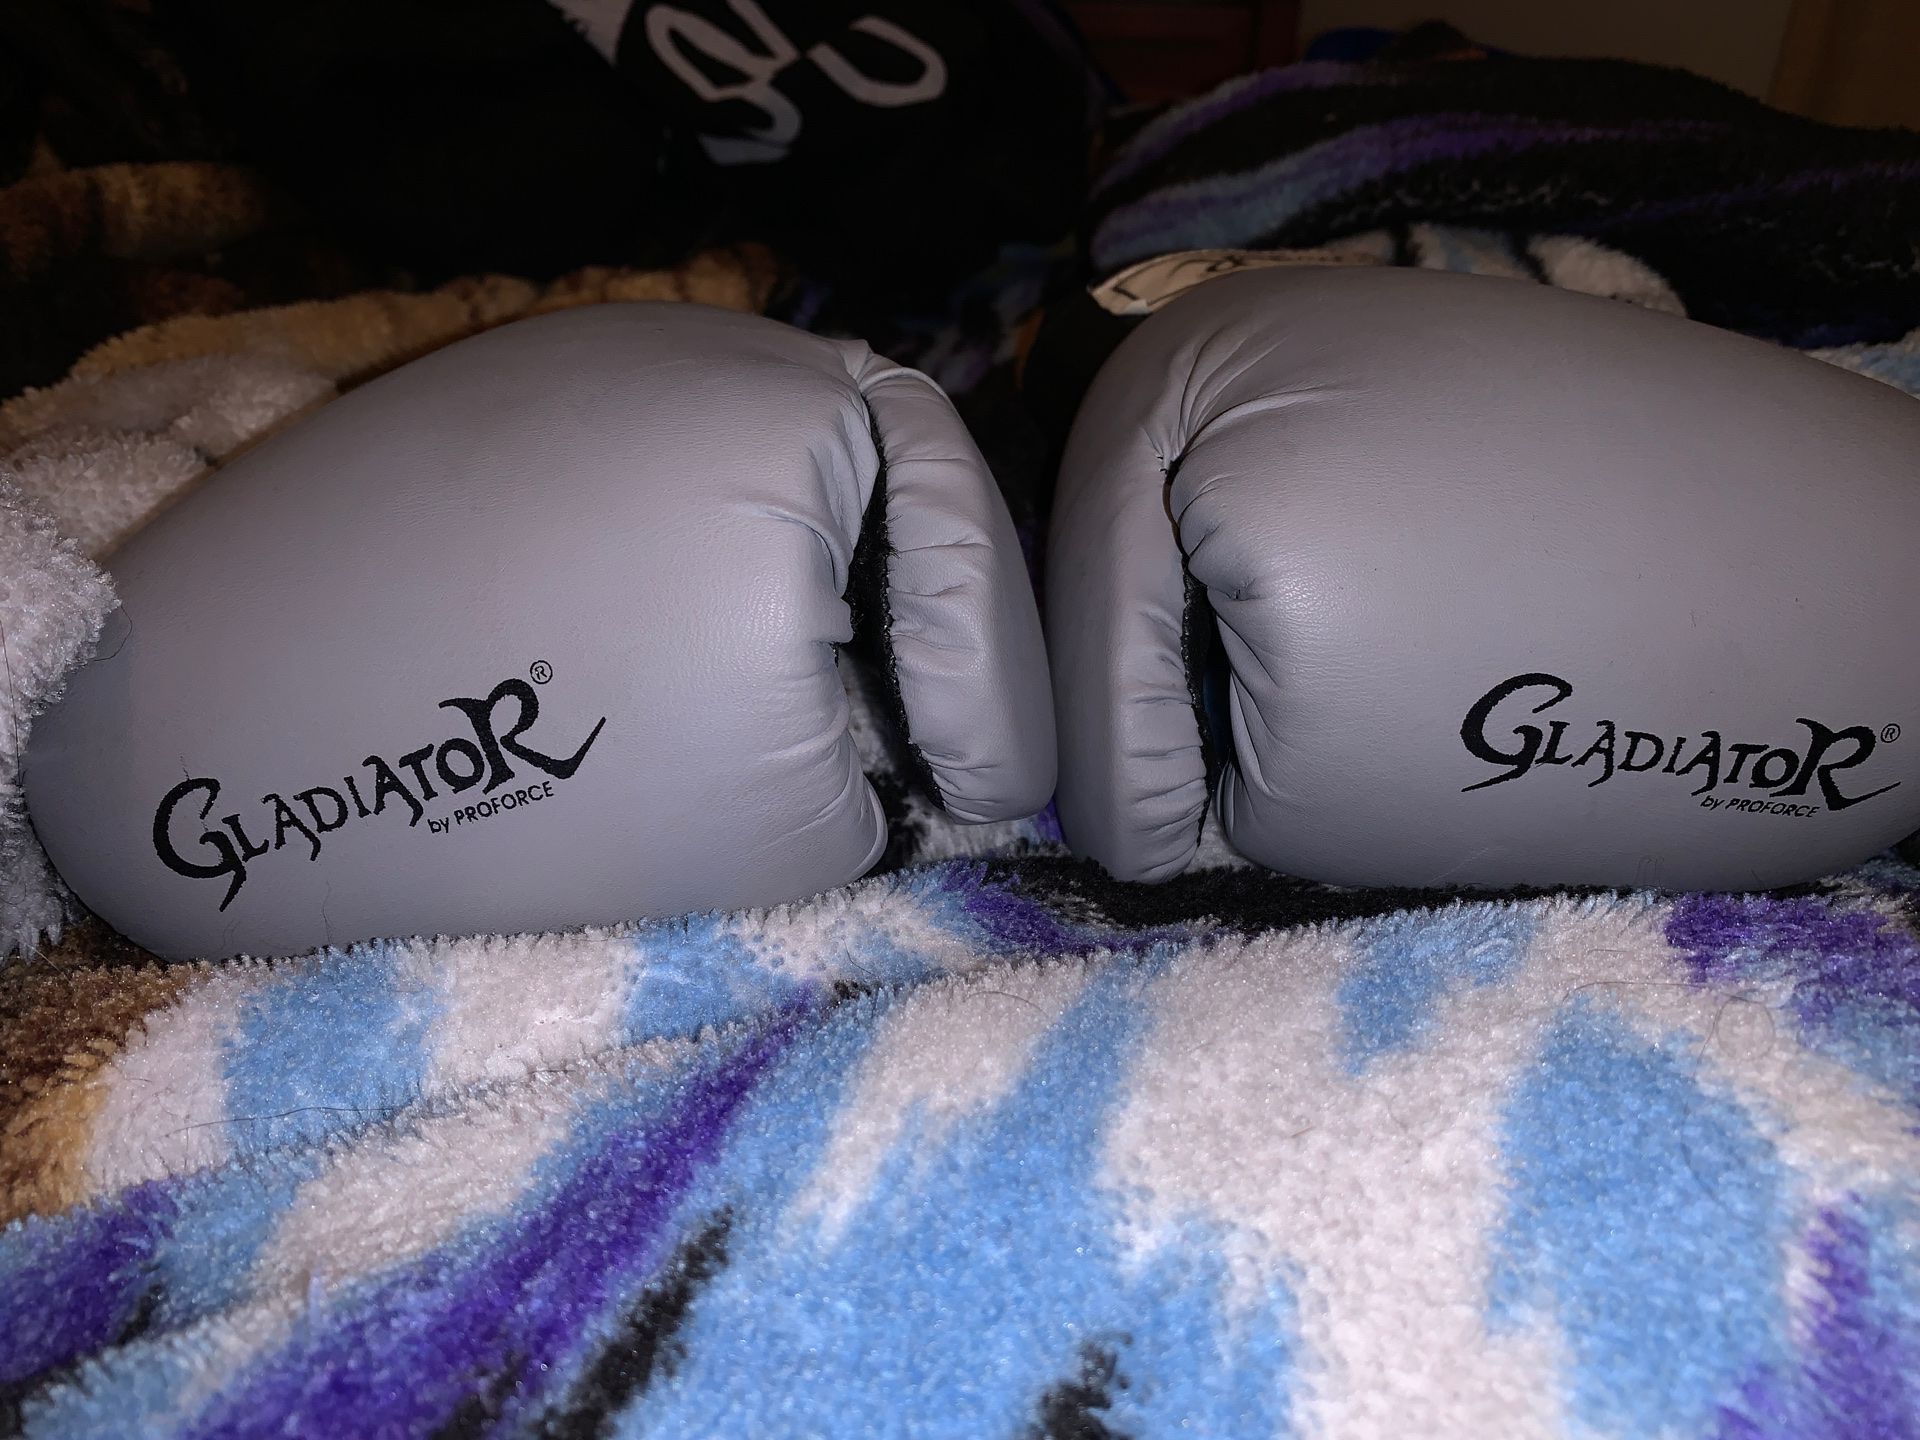 12oz gladiator boxing gloves